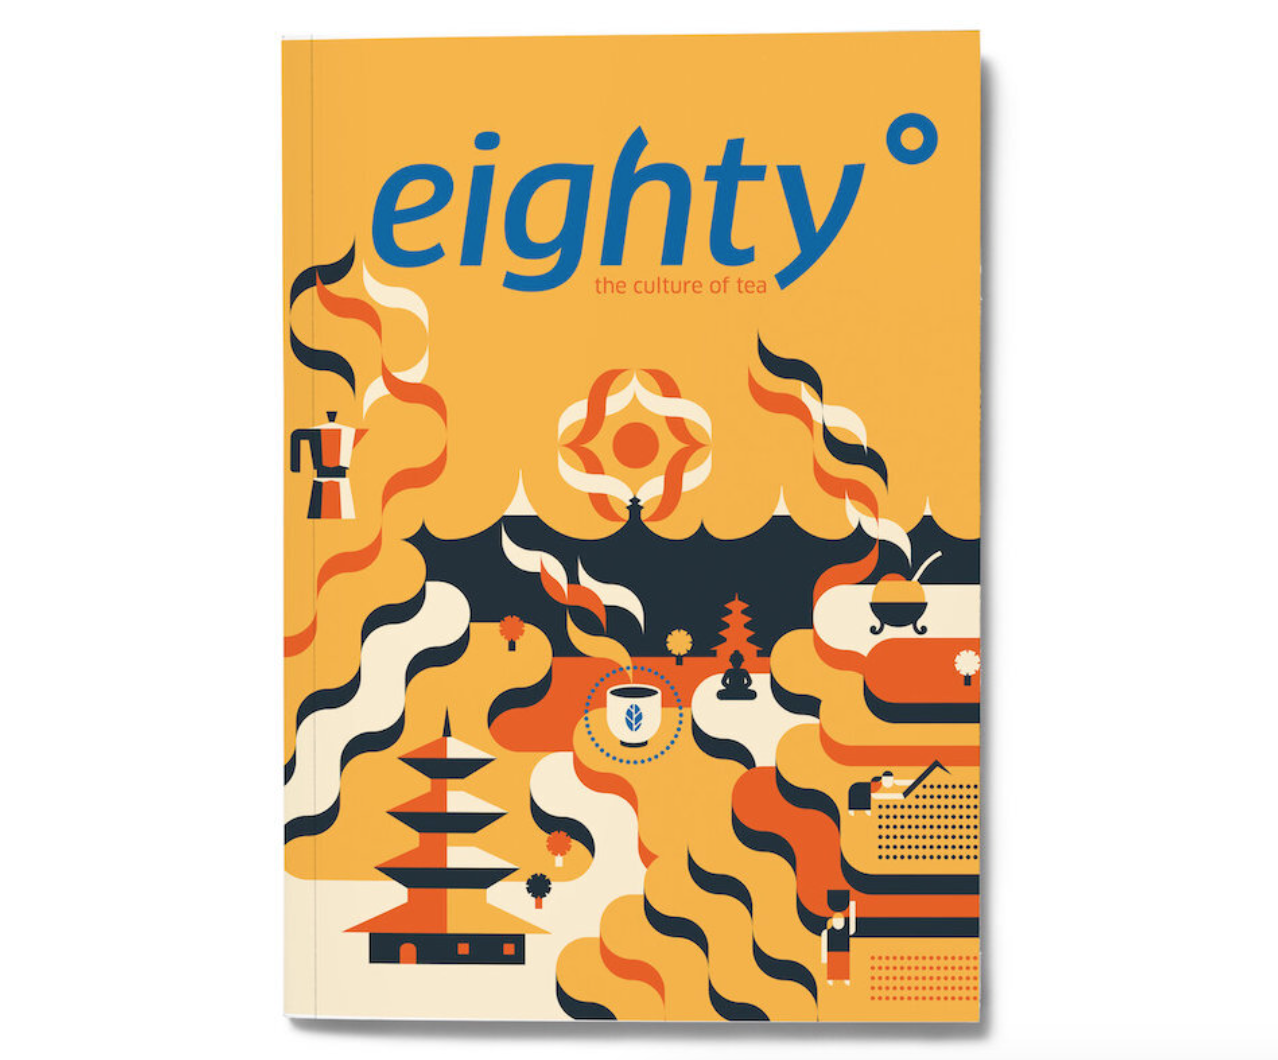 Eighty degrees tea magazine - Issue 5